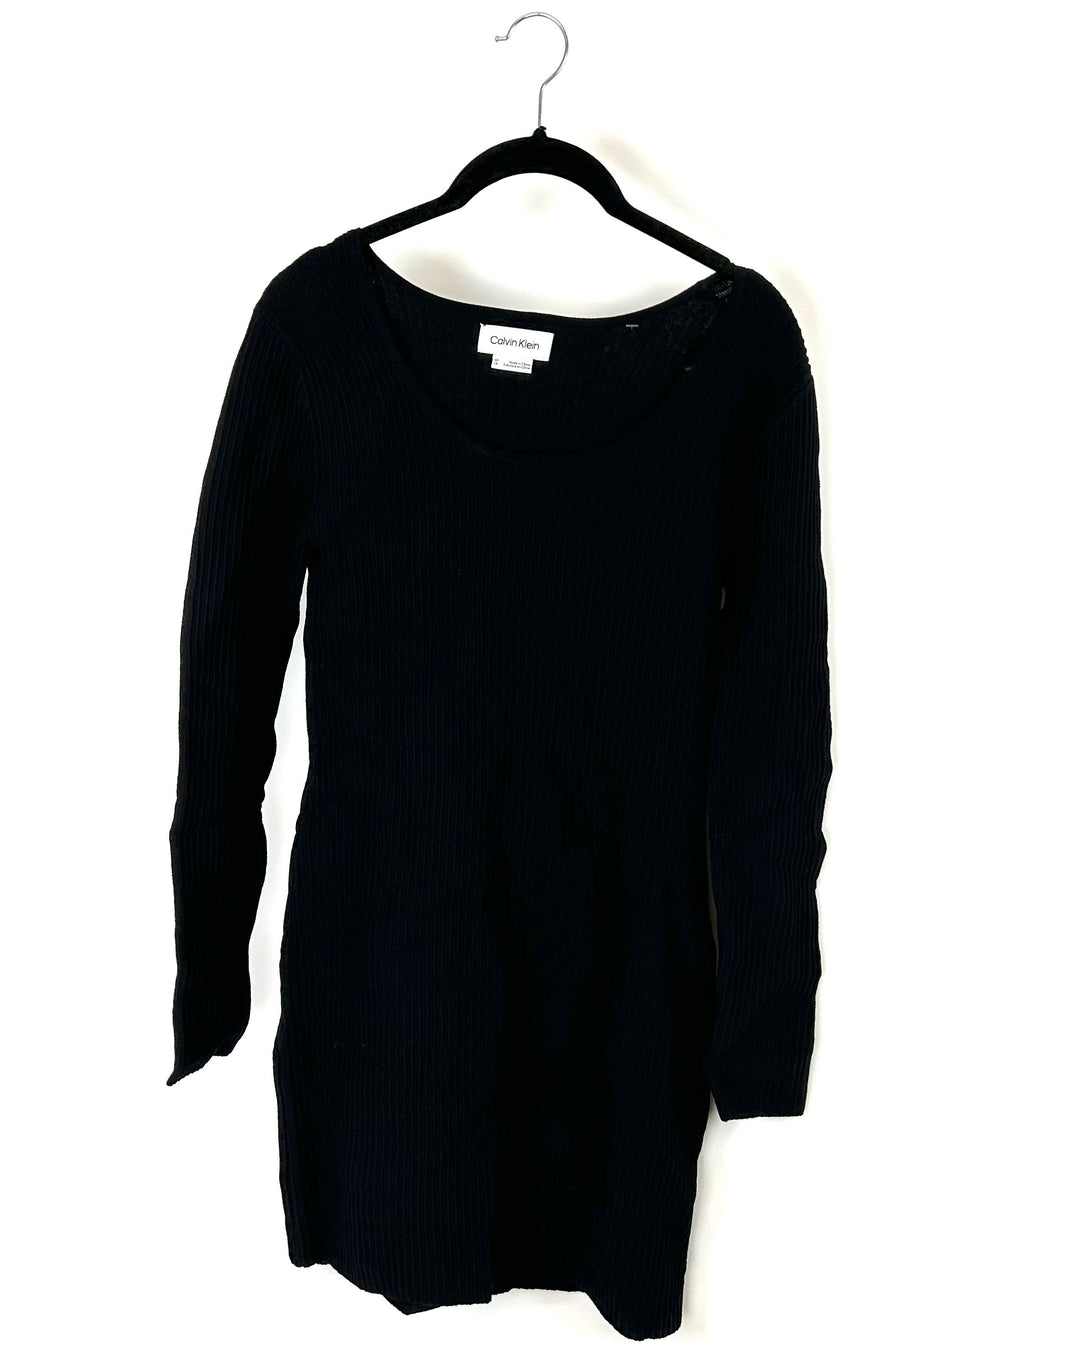 Black Long Sleeve Dress - Small